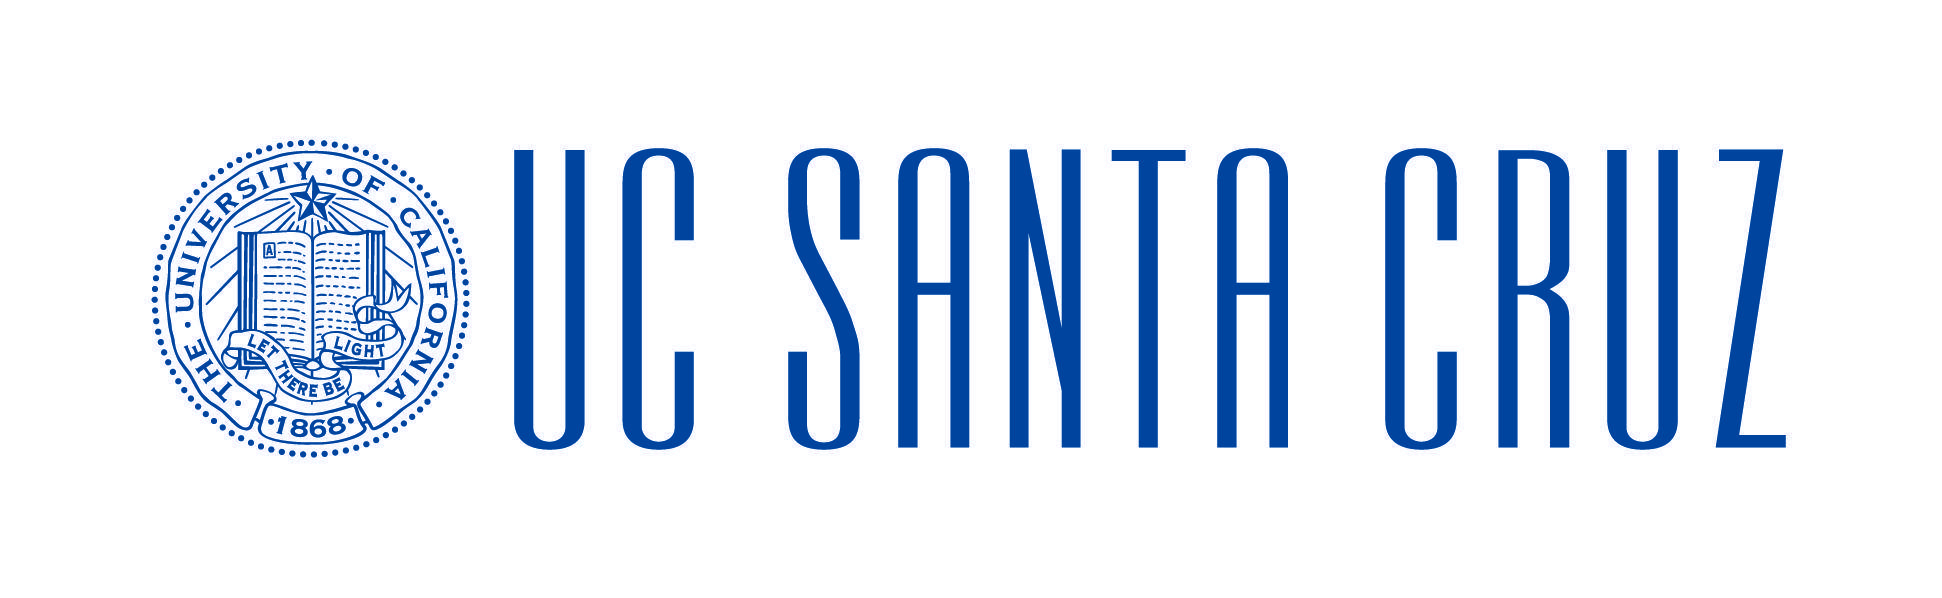 UC Santa Cruz Logo - UC Santa Cruz Logo – Primary – Blue Coated CMYK